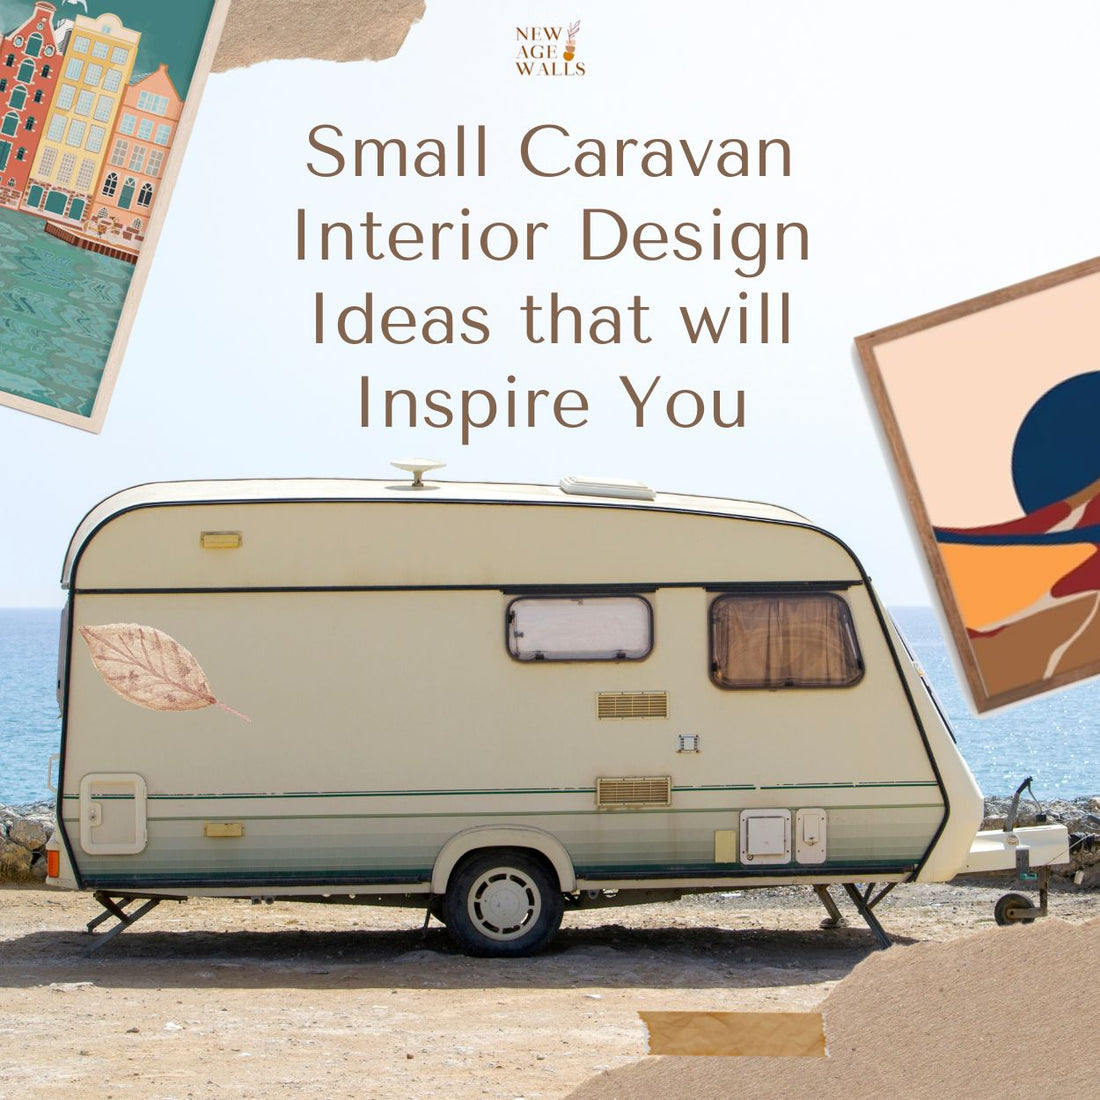 8 Small Caravan Interior Design Ideas that will Inspire You